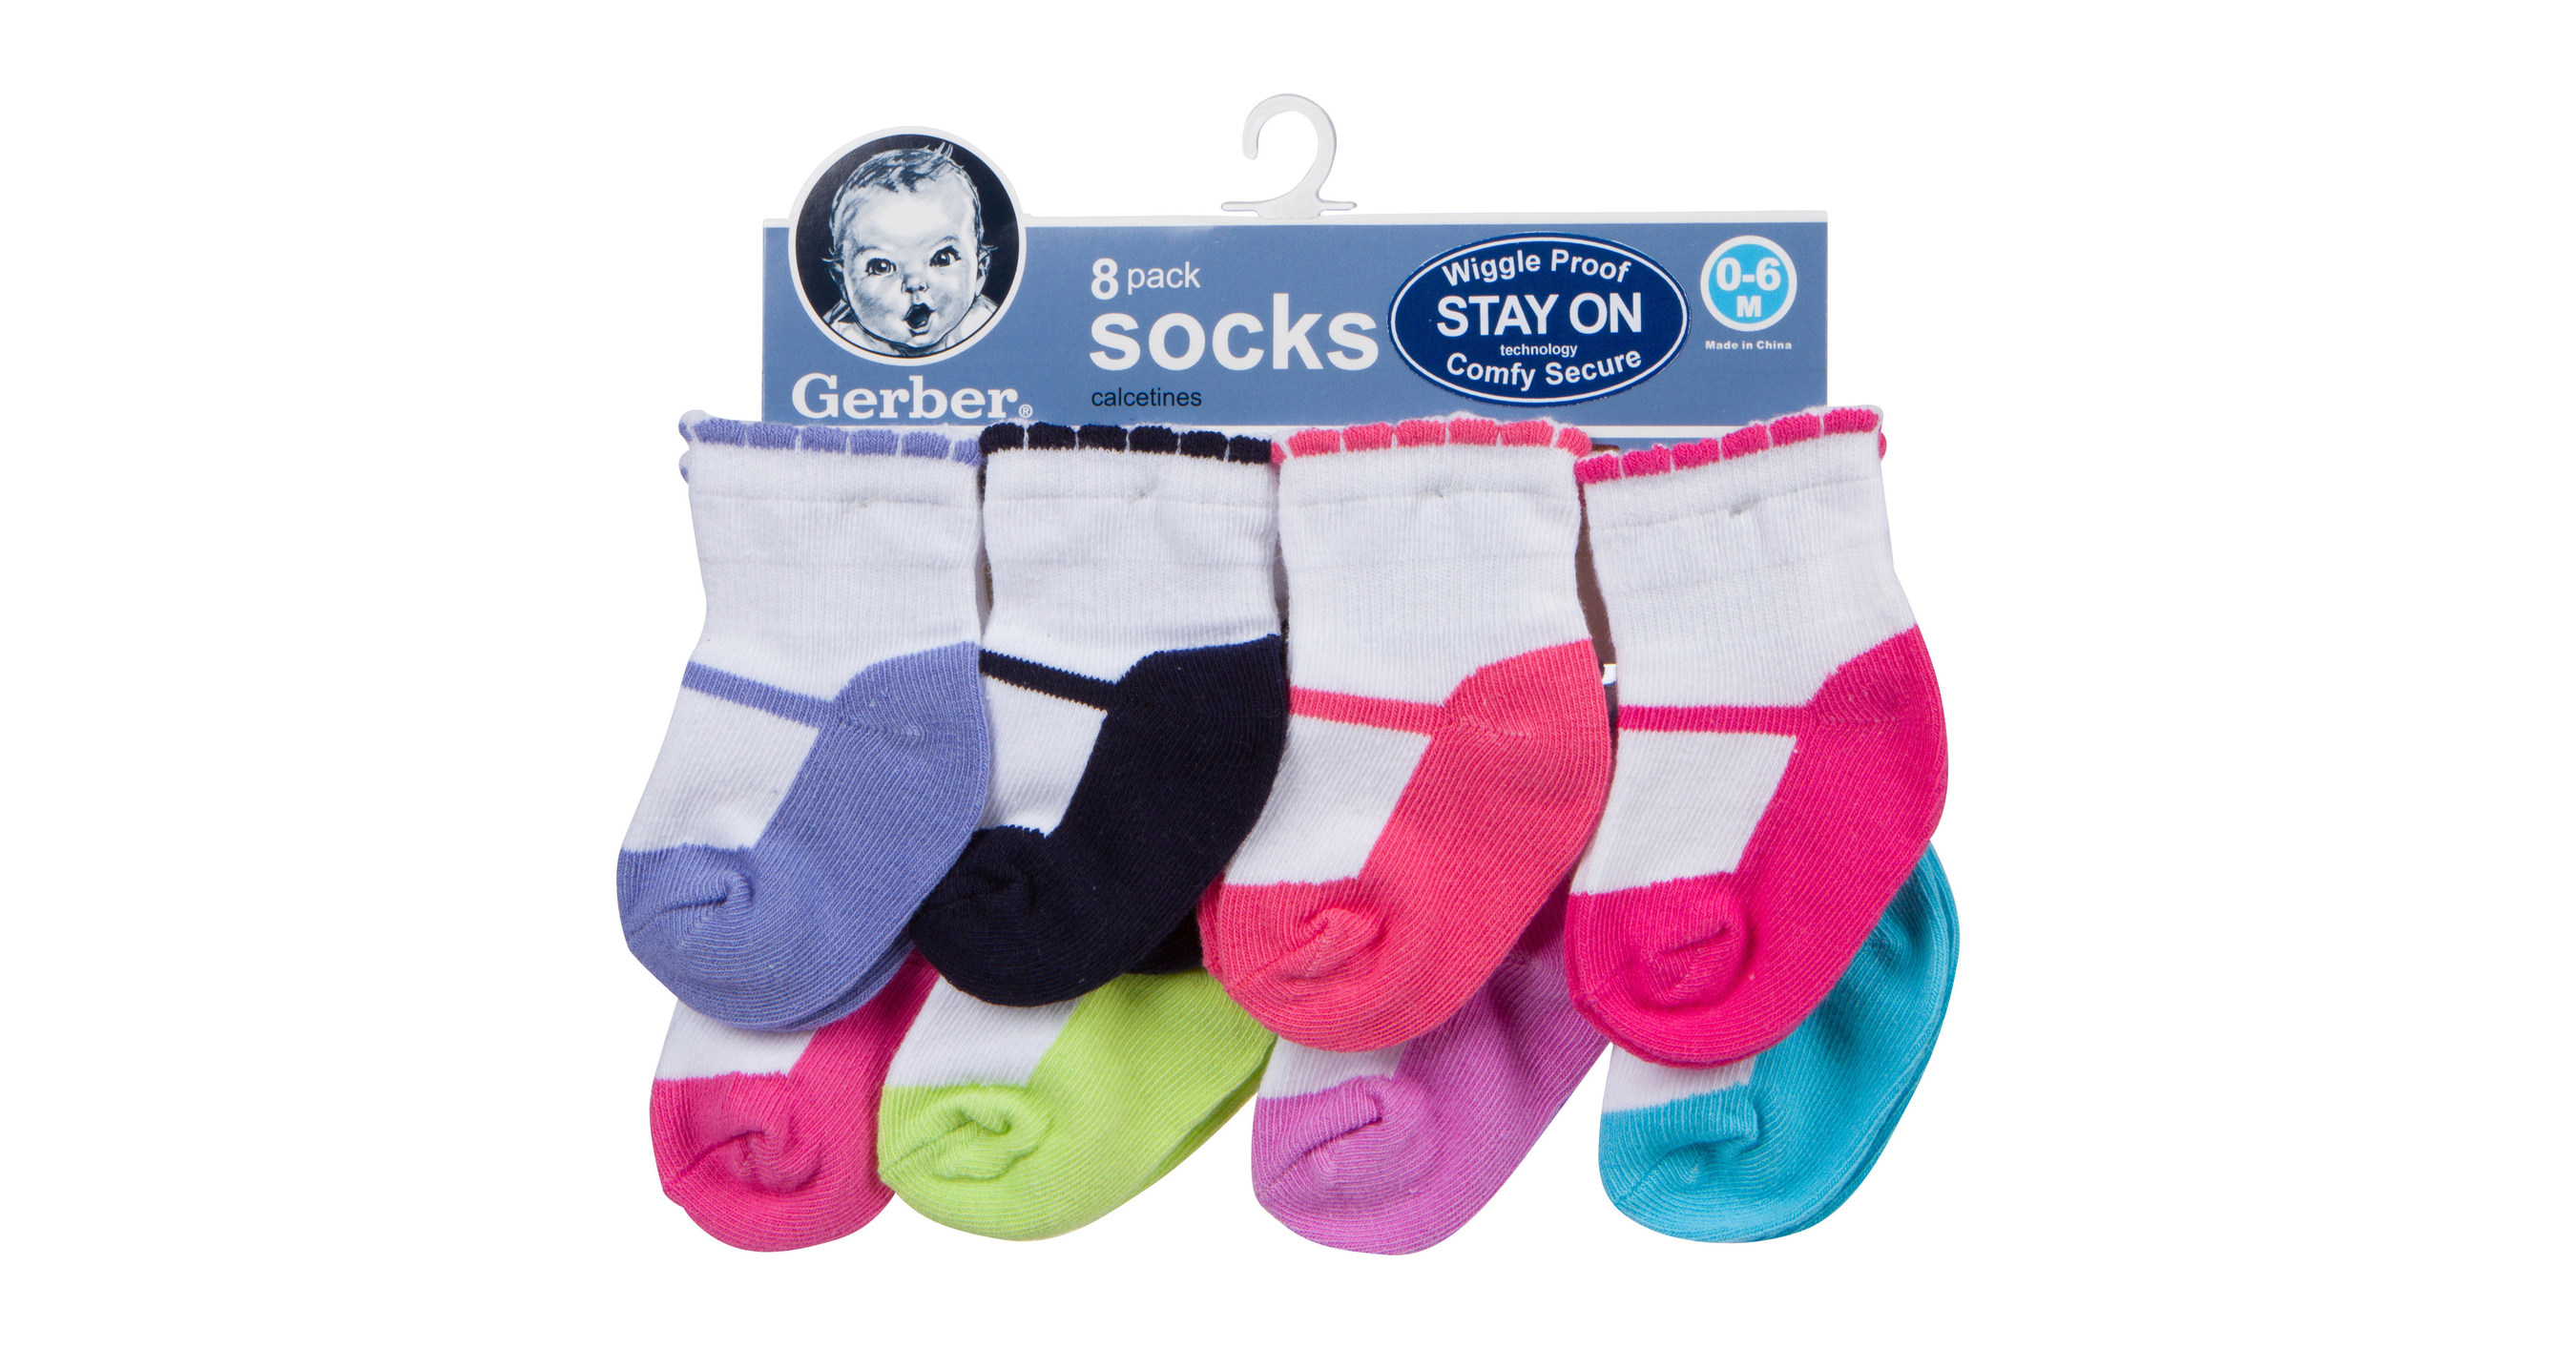 Gerber Childrenswear's Newest Innovation: Gerber® Wiggle-Proof Socks ...